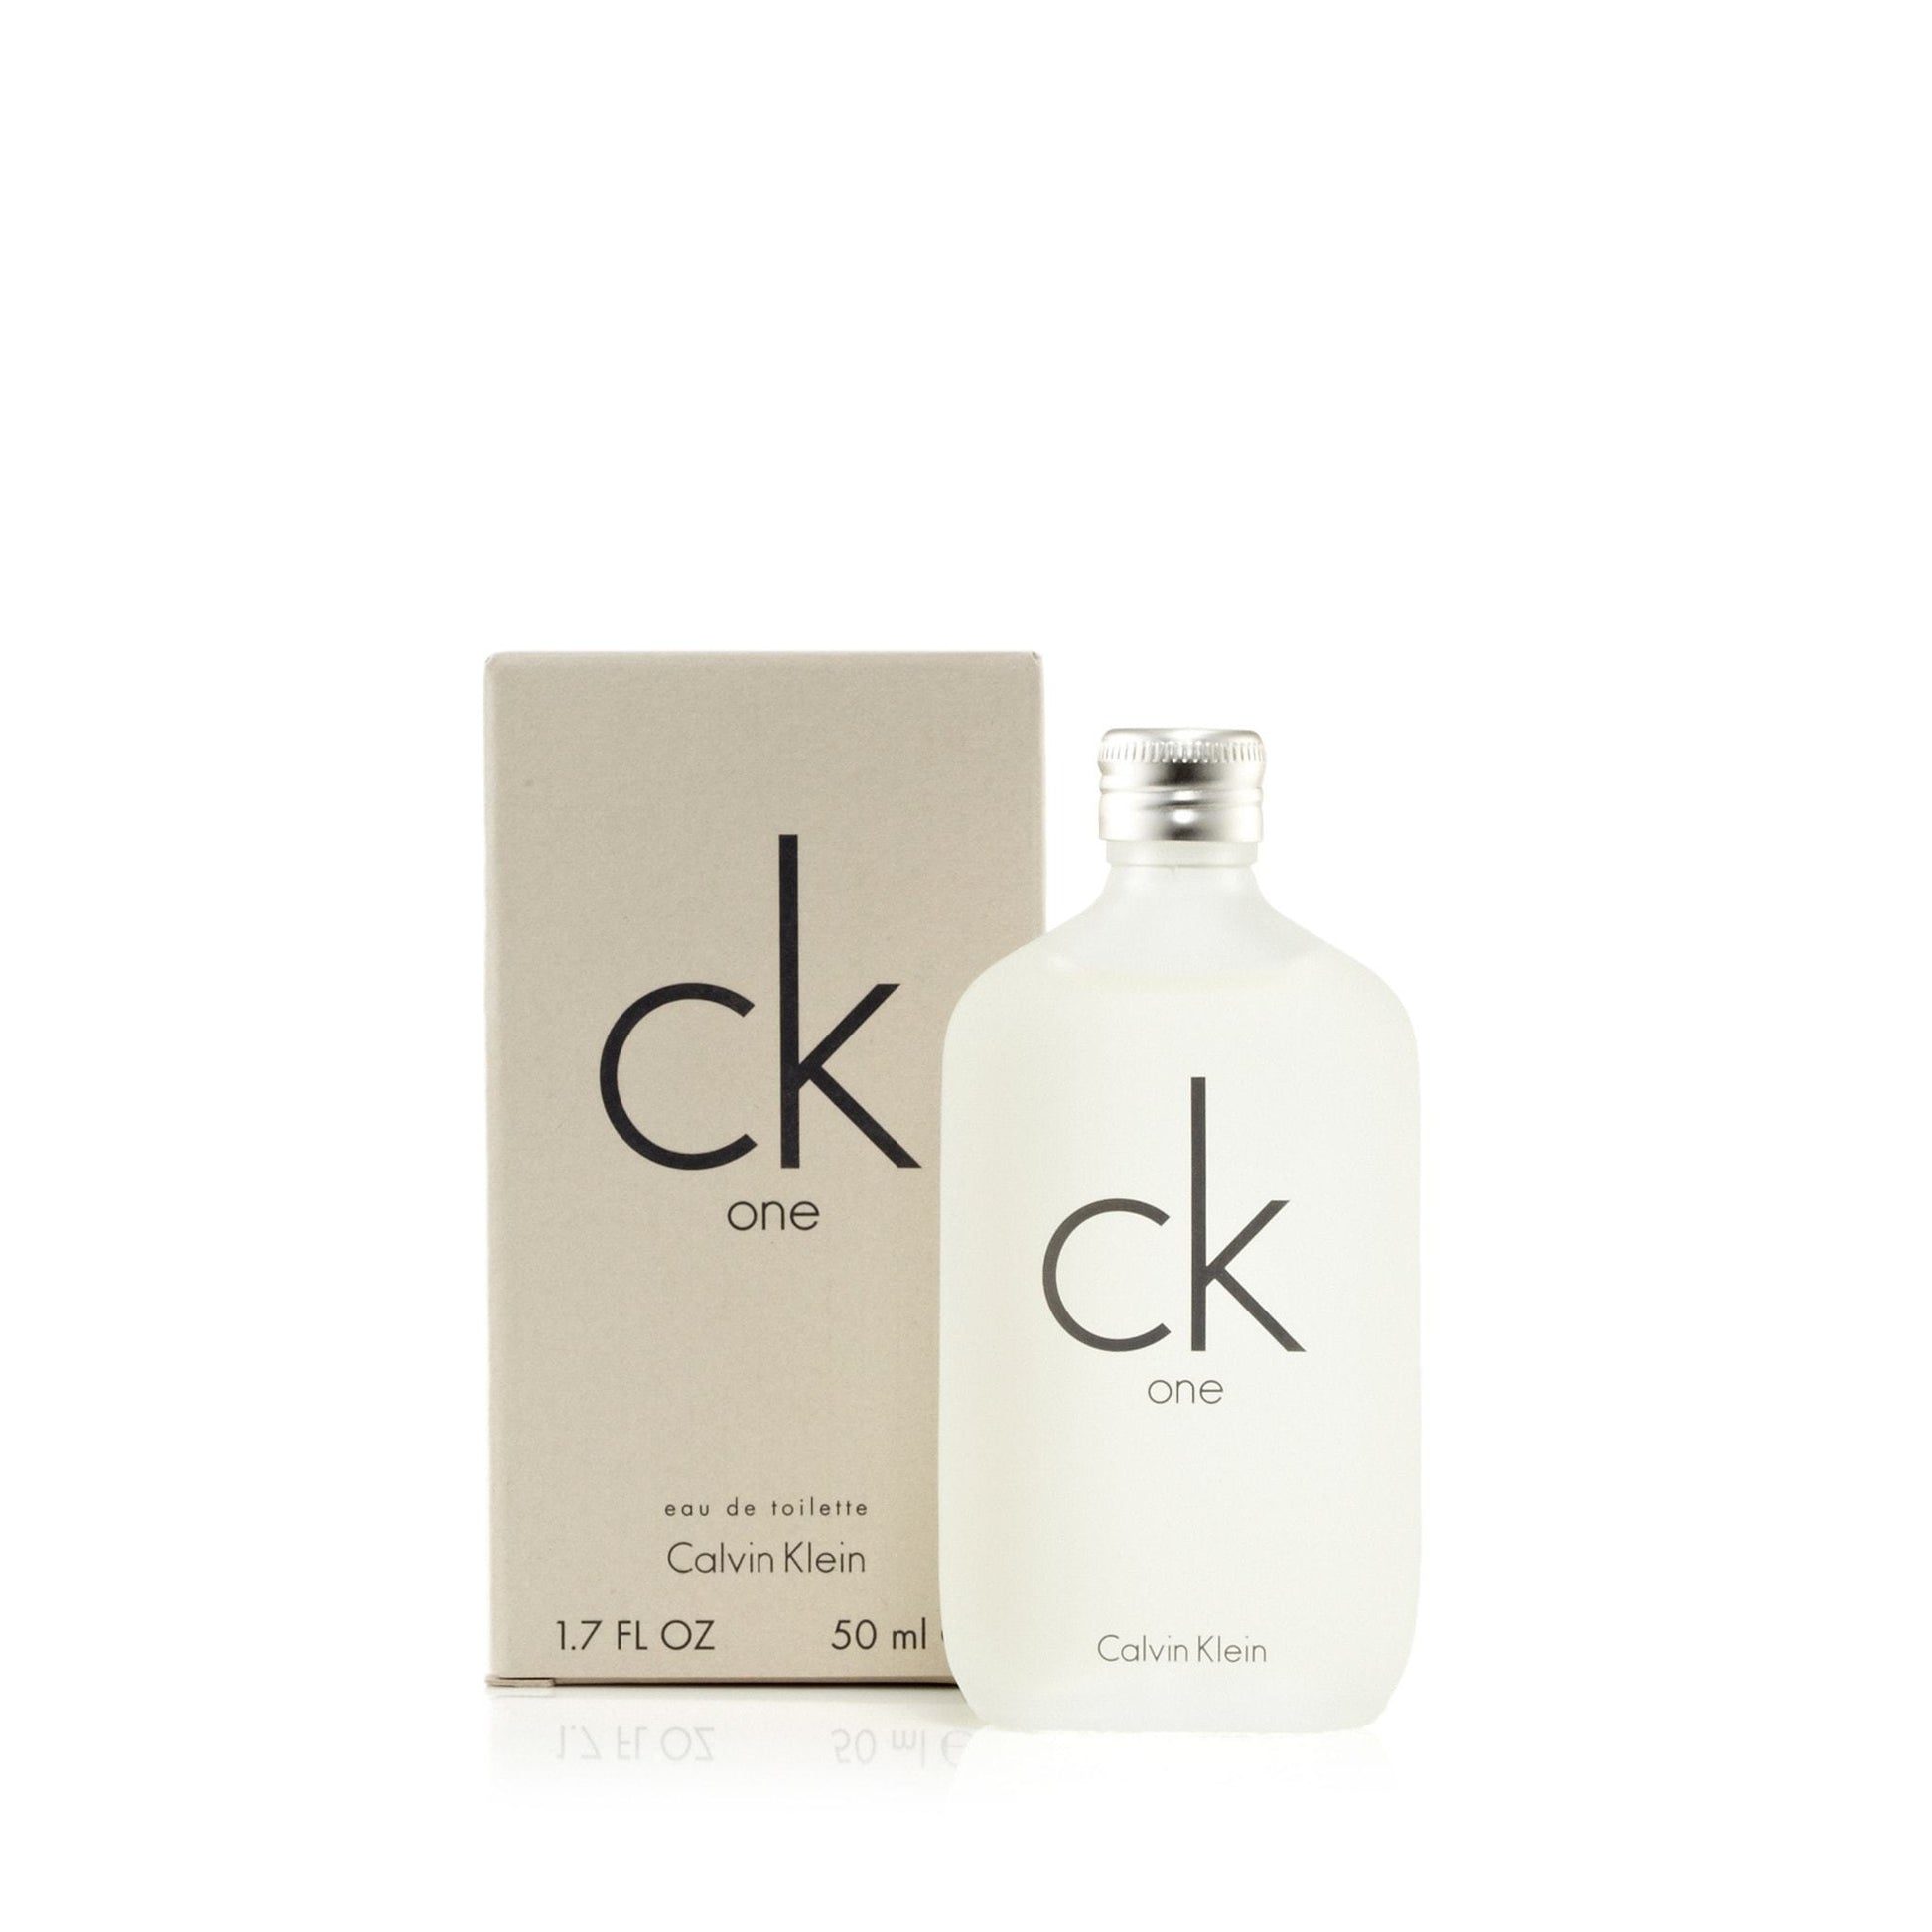 CK One Eau de Toilette Spray for Women and Men by Calvin Klein, Product image 5